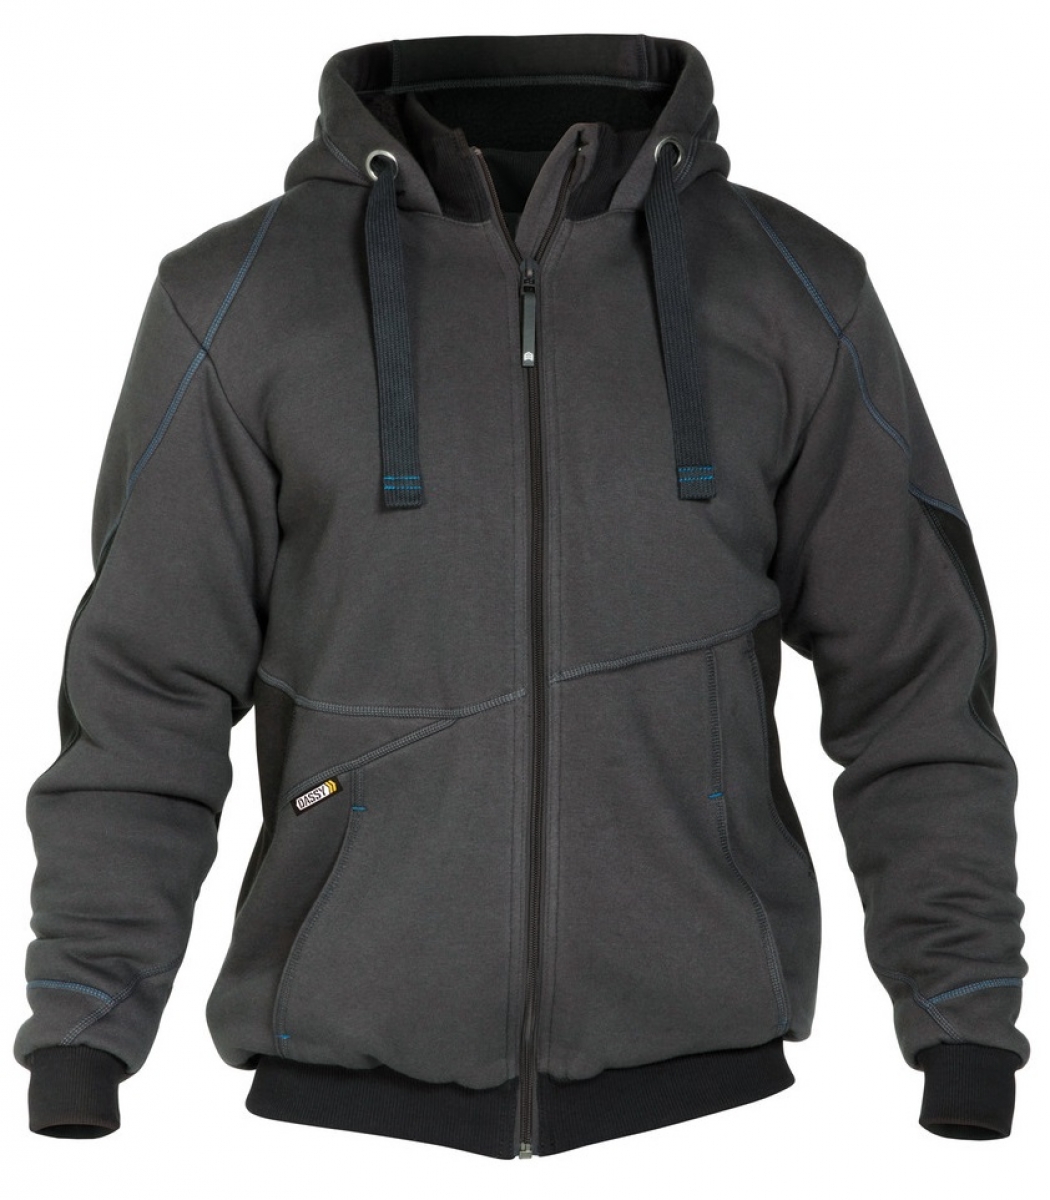 DASSY-Workwear, Sweatshirt-Jacke "PULSE", grau/schwarz